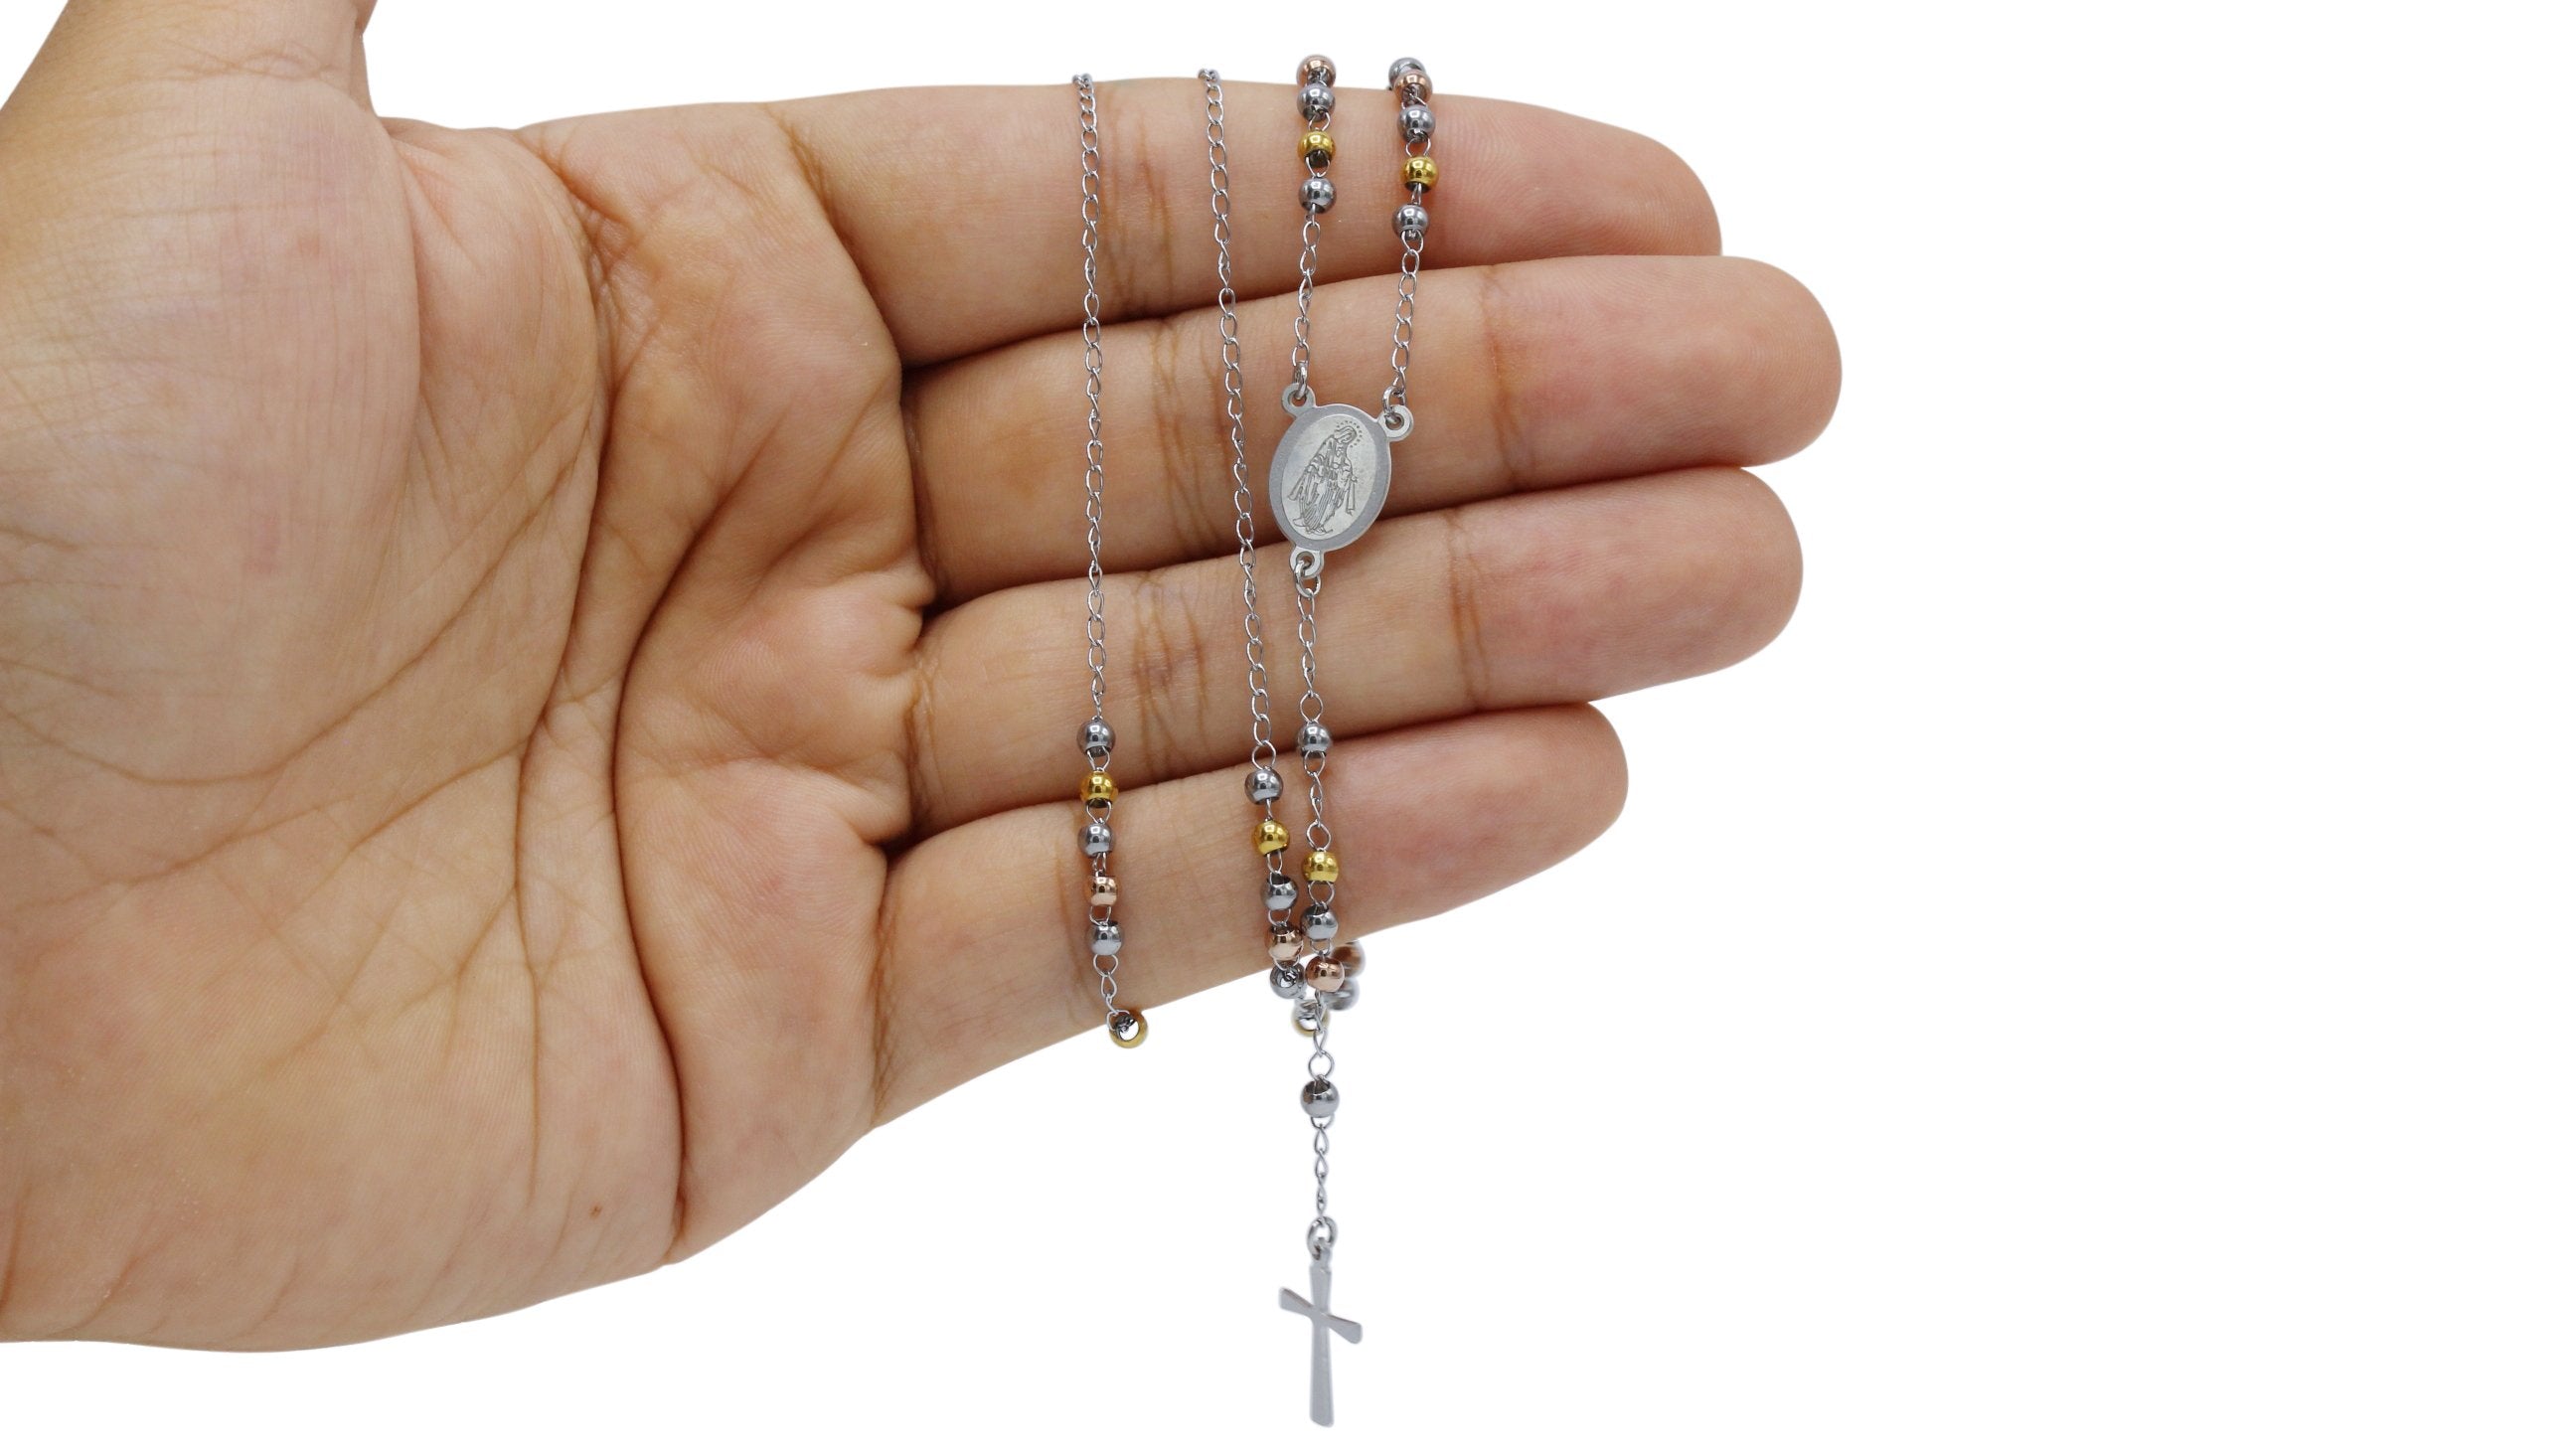 Cross Pendant Necklace Jewelry 